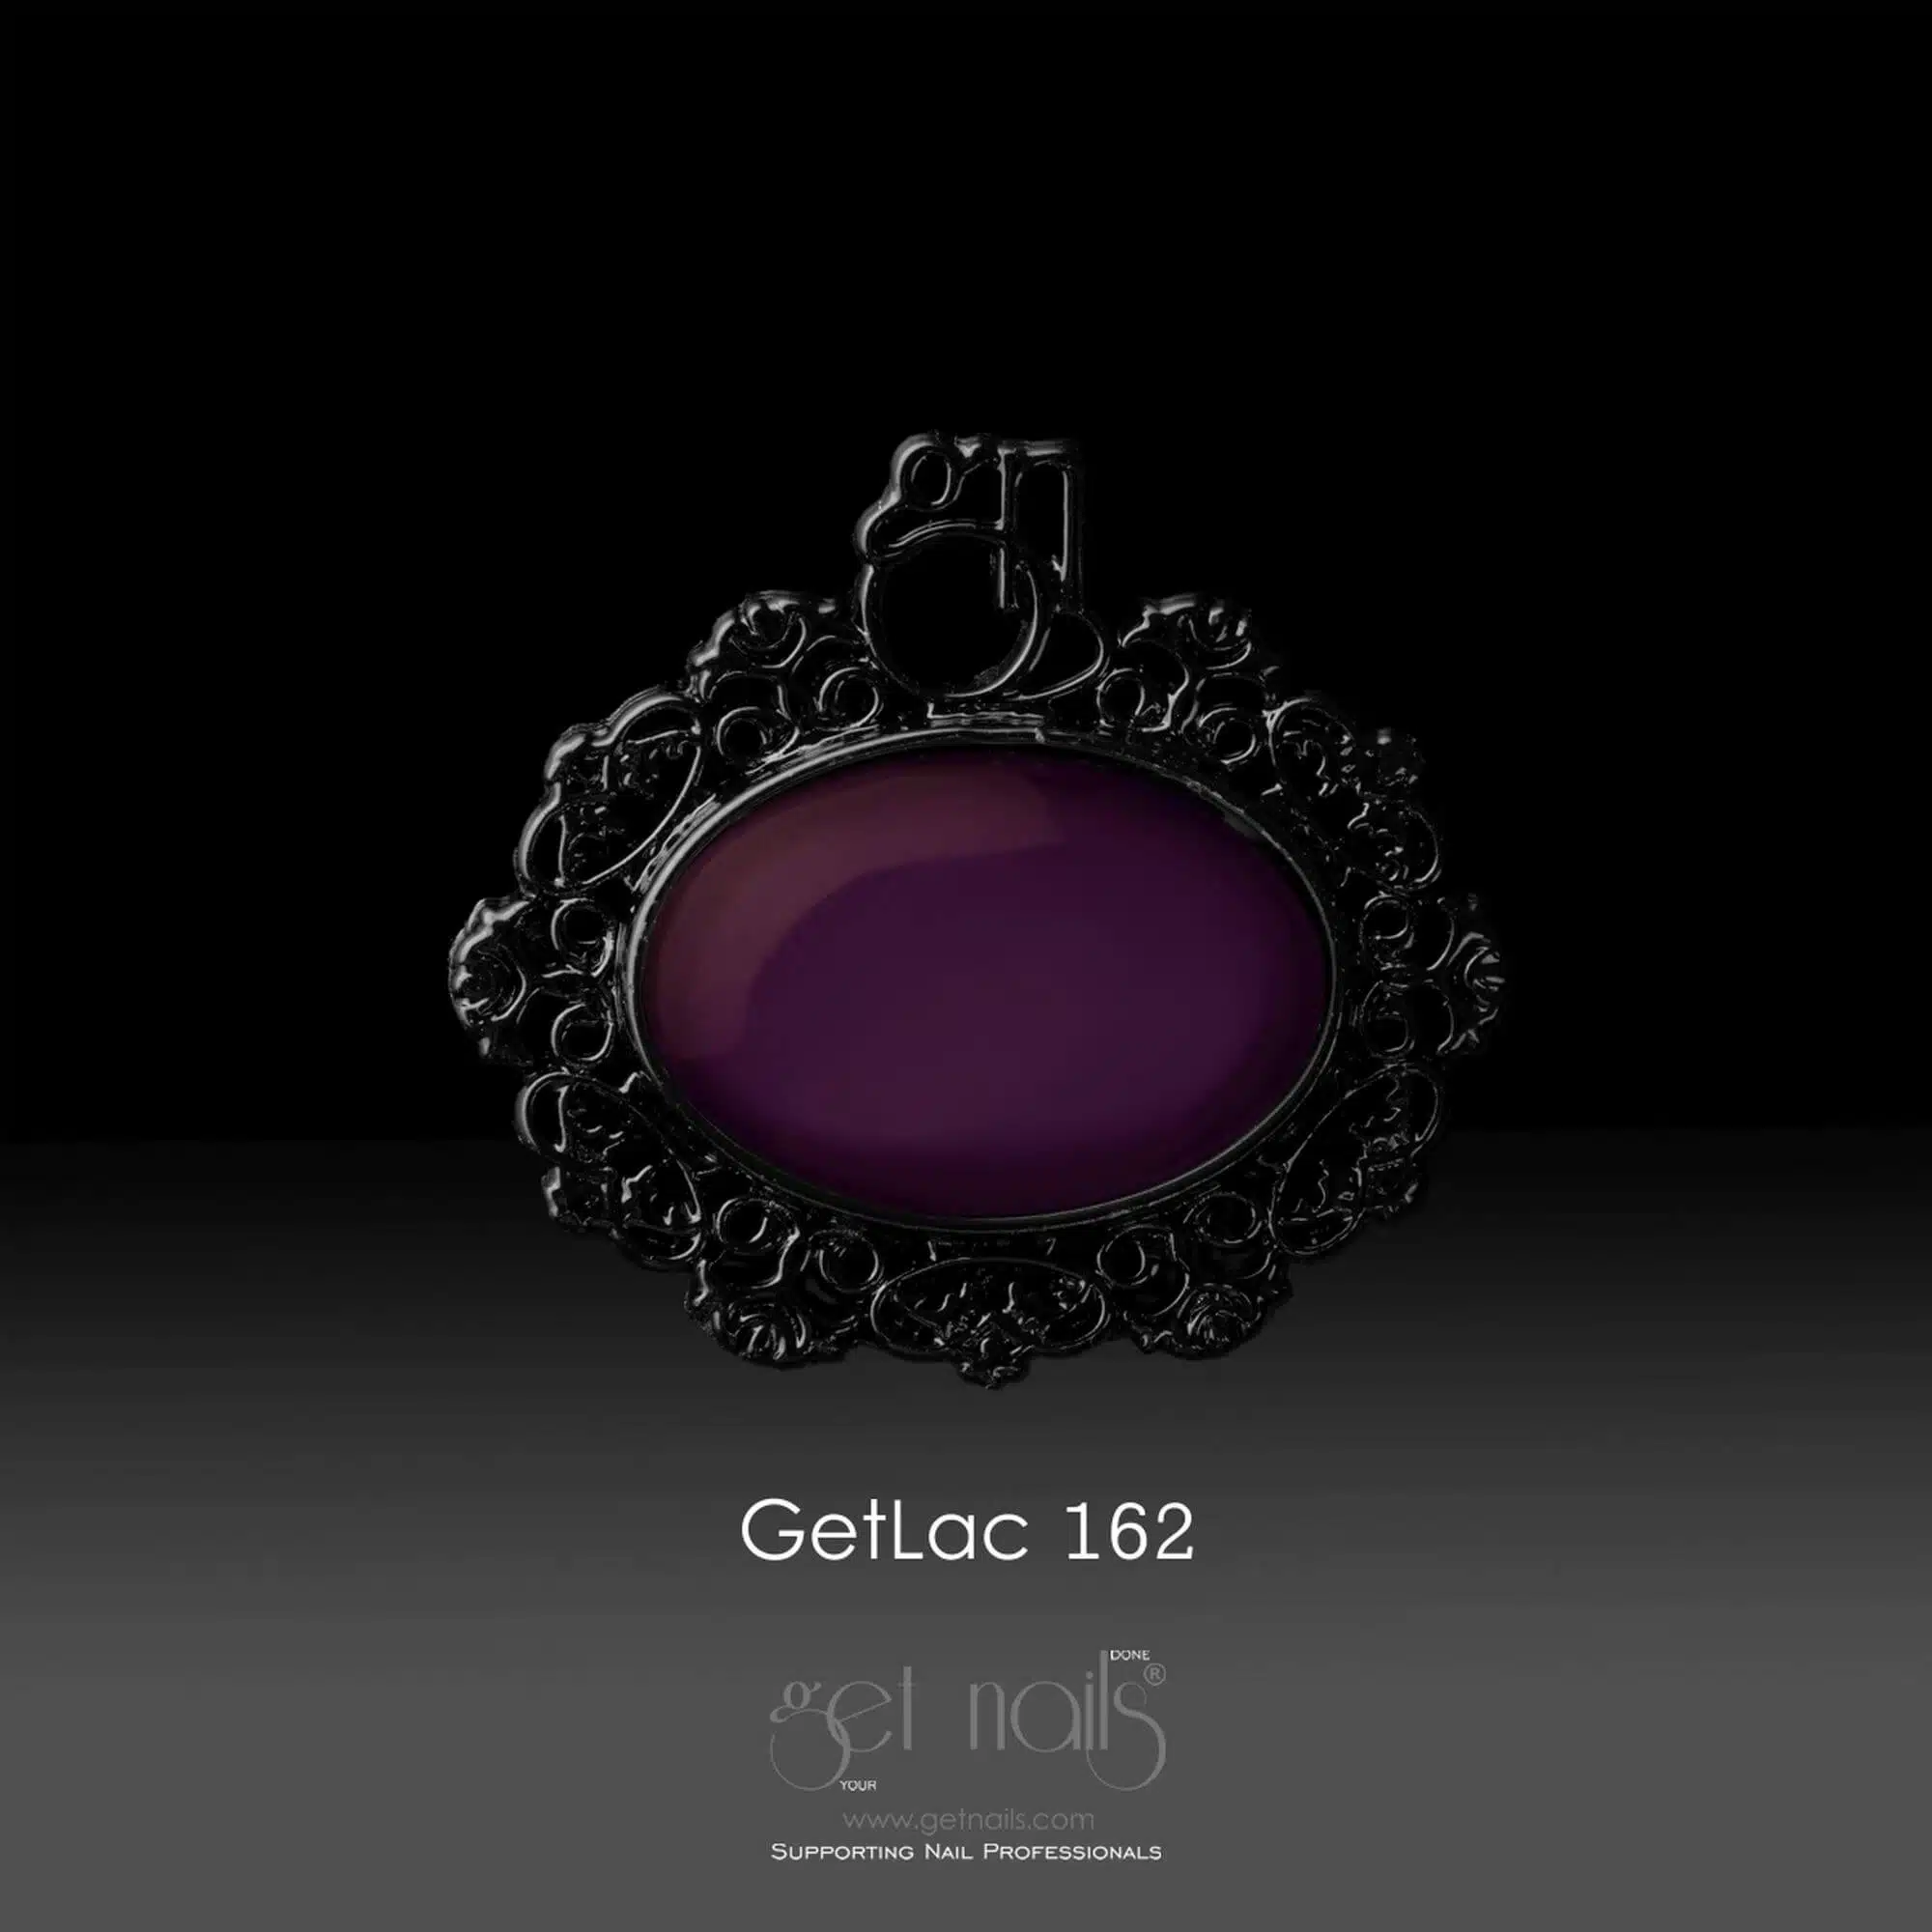 Get Nails Austria - GetLac 162 15г